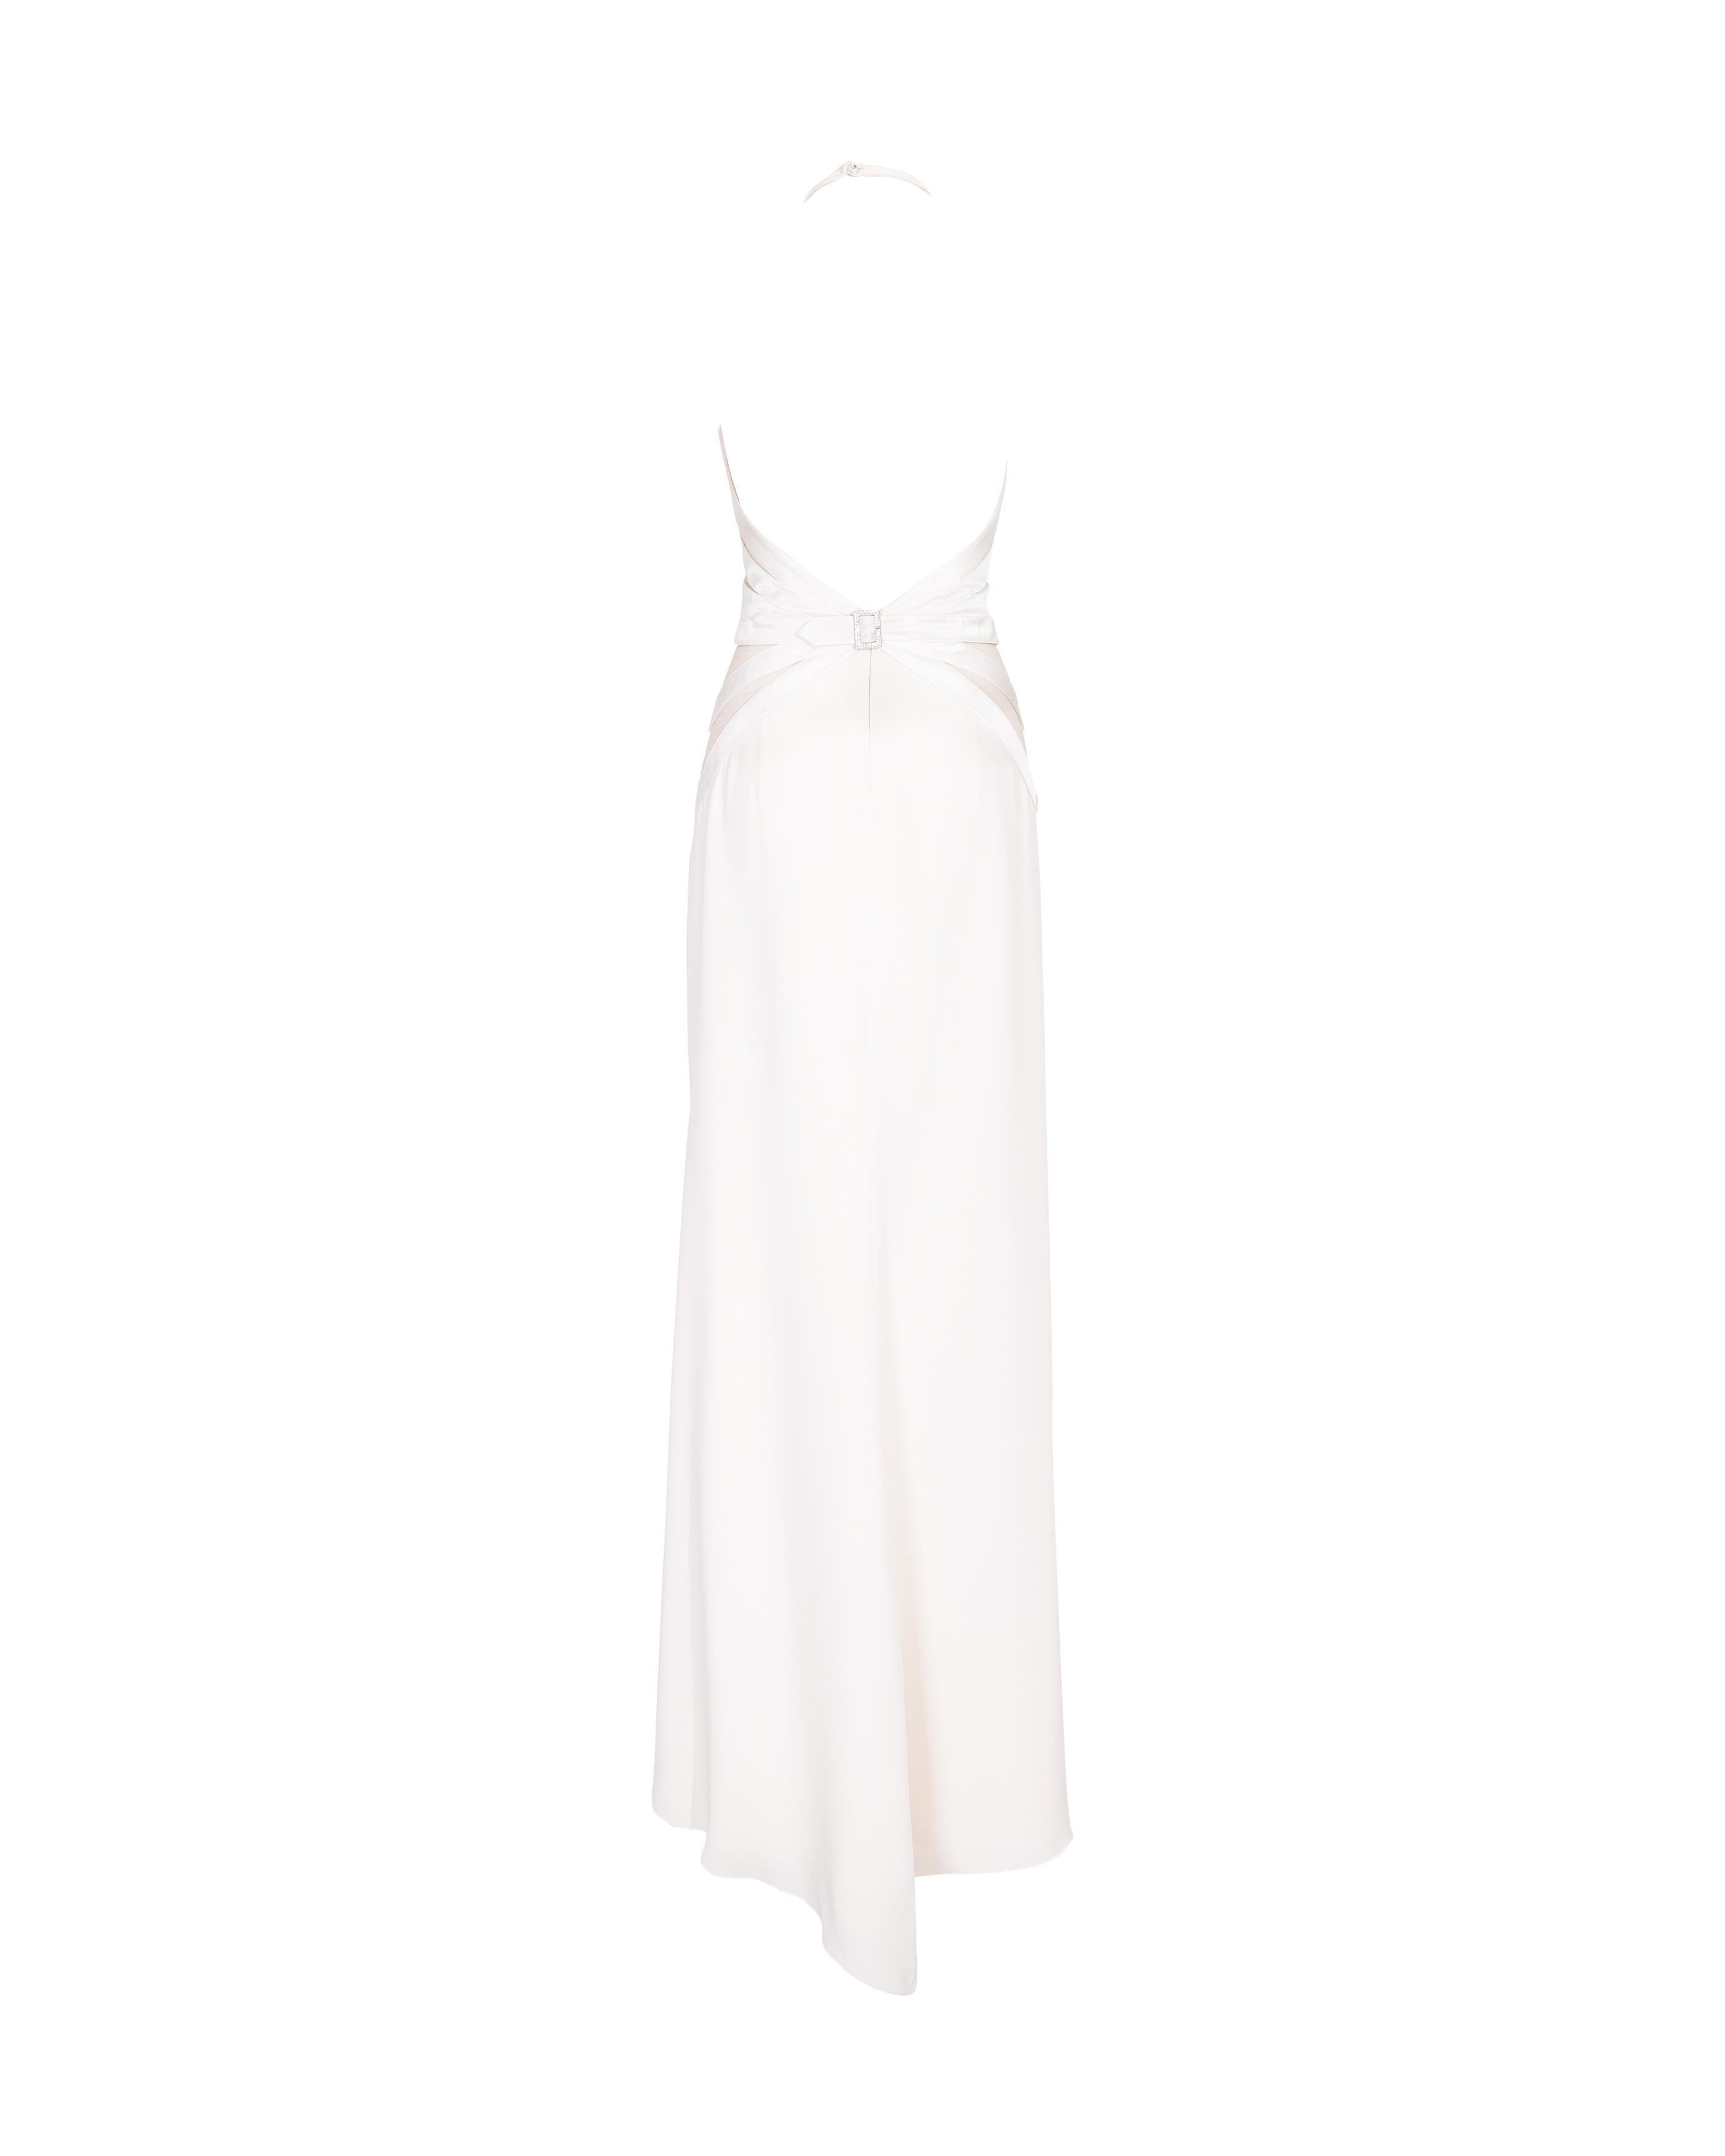 2000's Valentino White Gown with Rhinestone Bondage Details 1